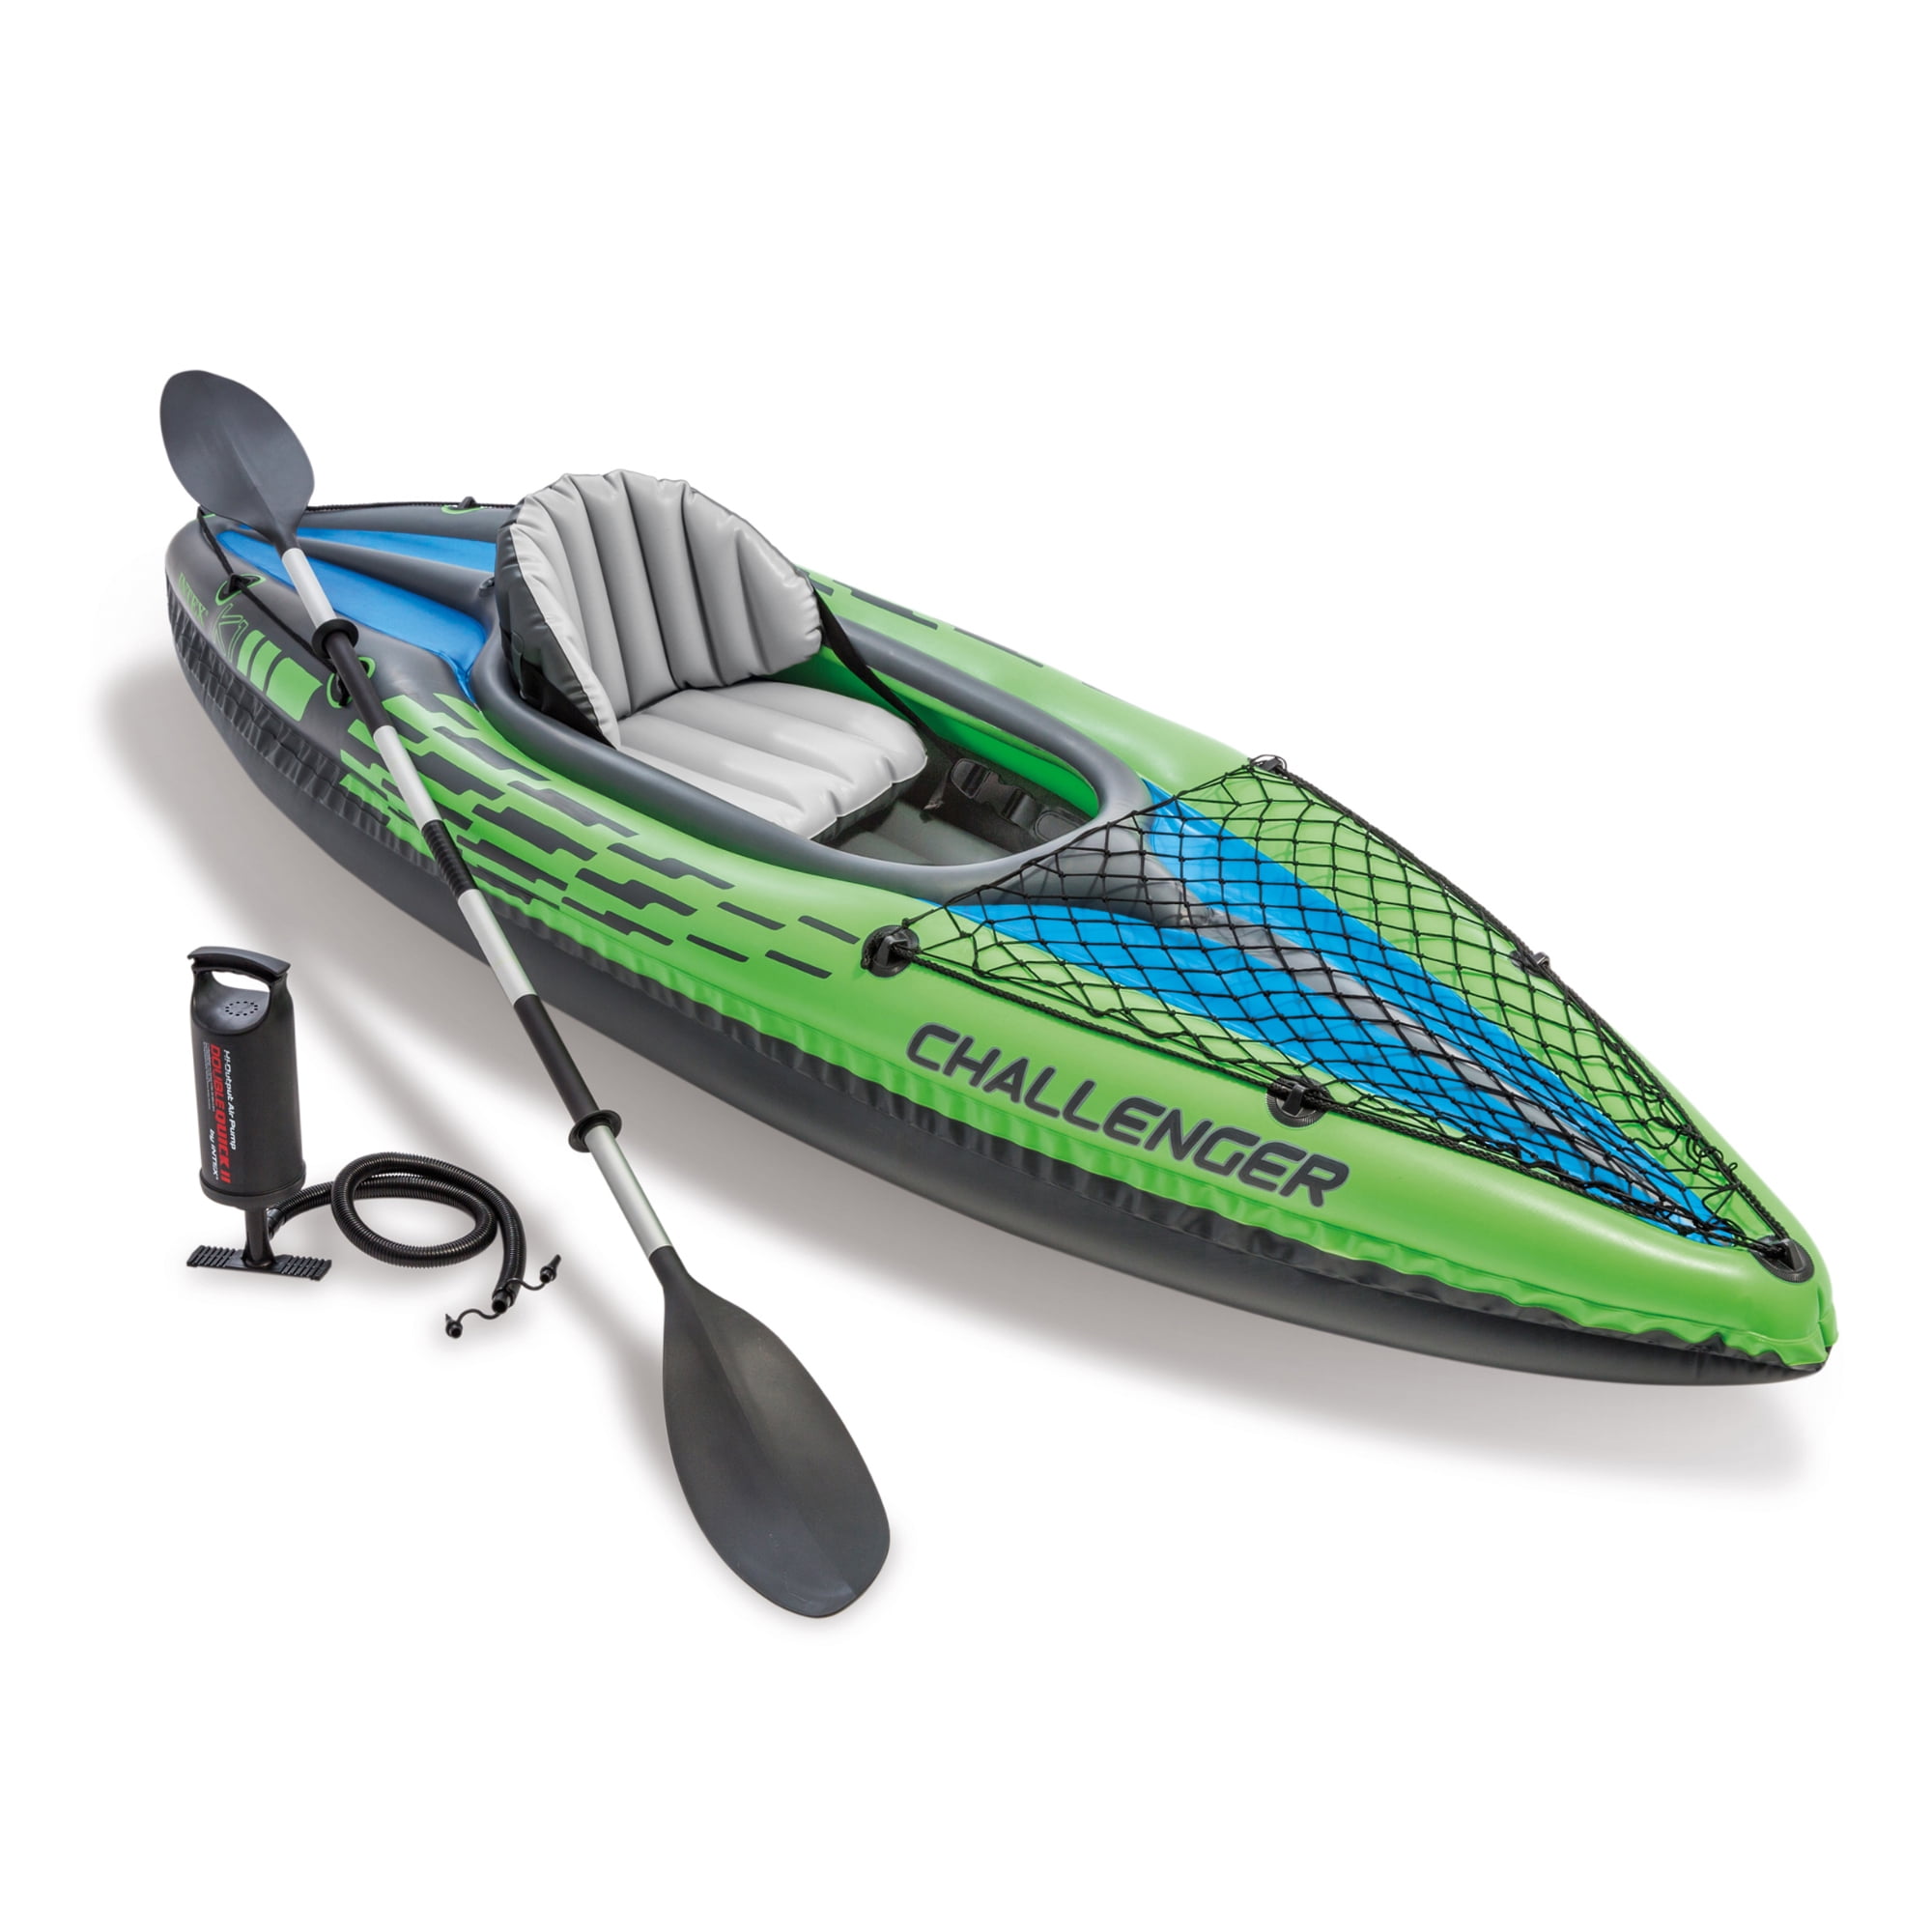 Intex Challenger K1 Inflatable Single Person Kayak Set and